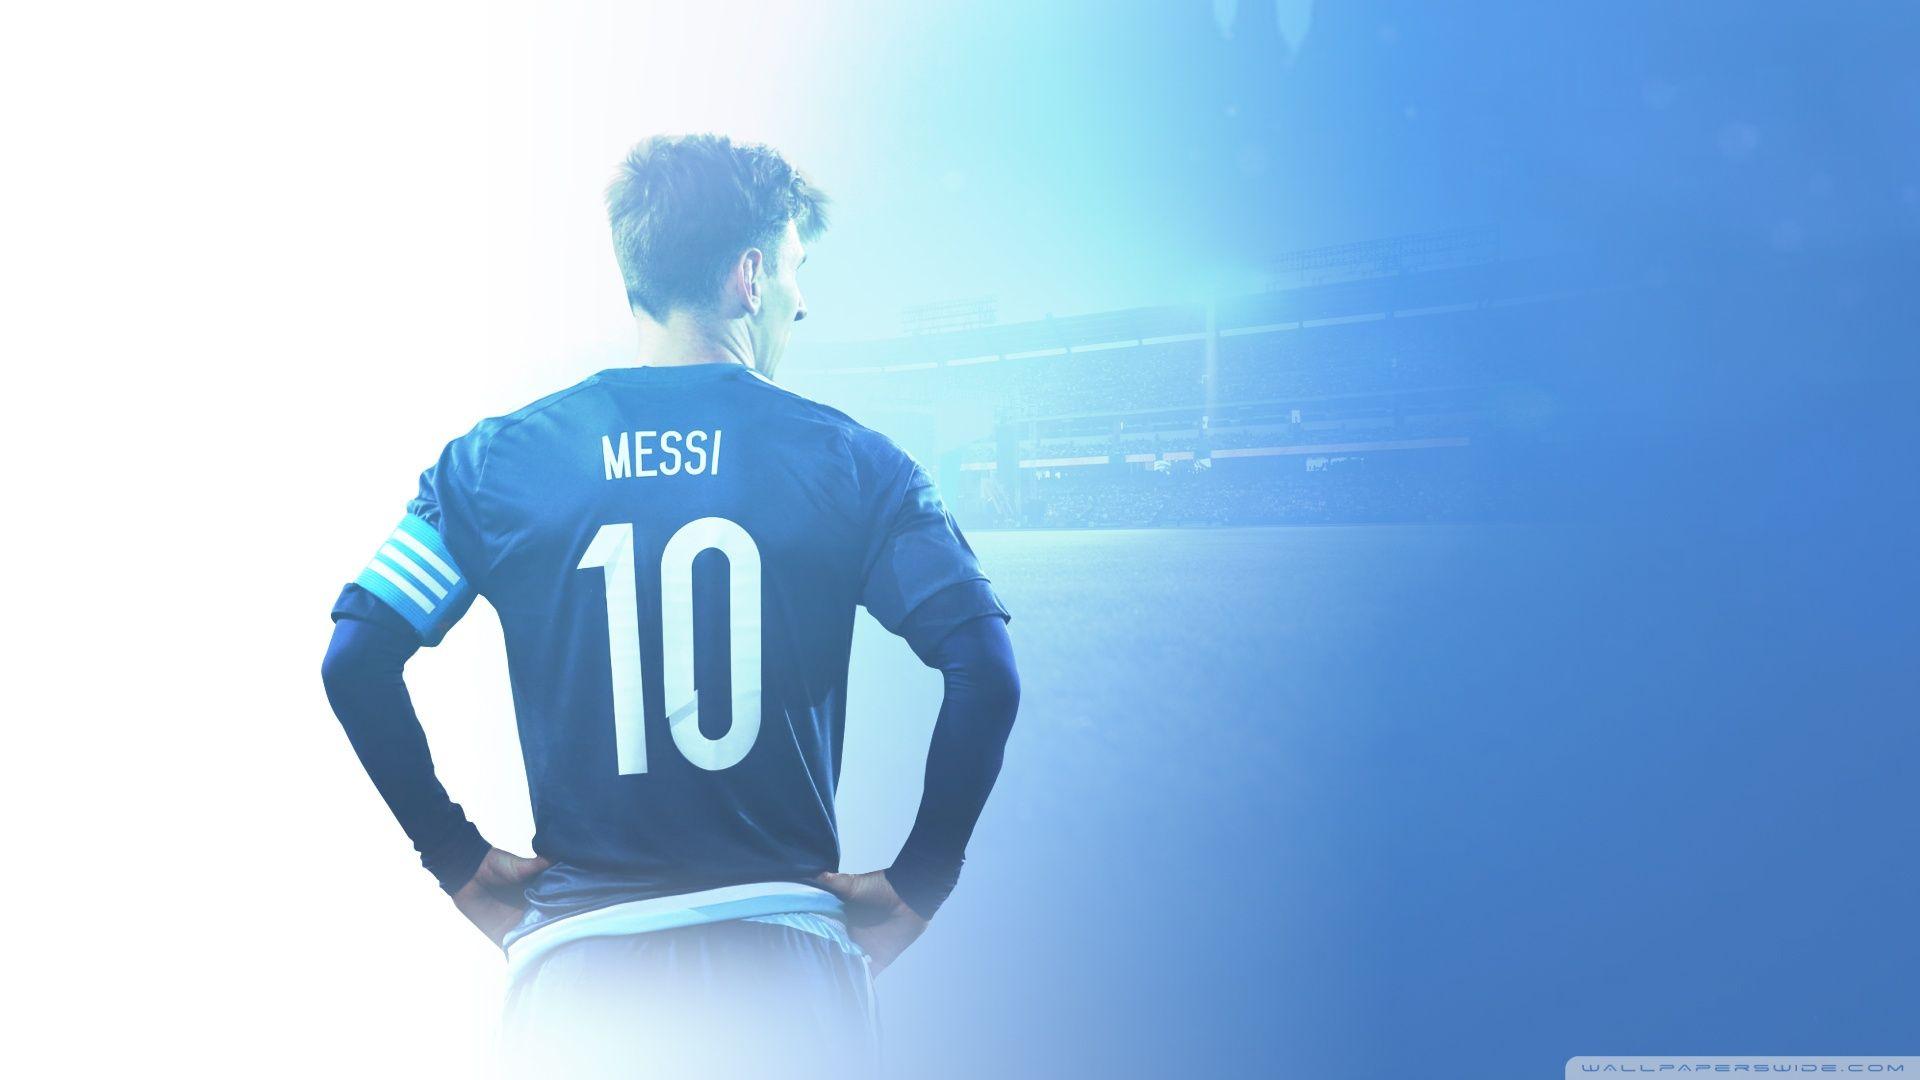 Leo Messi America 2015 ❤ UHD desktop wallpaper for Ultra